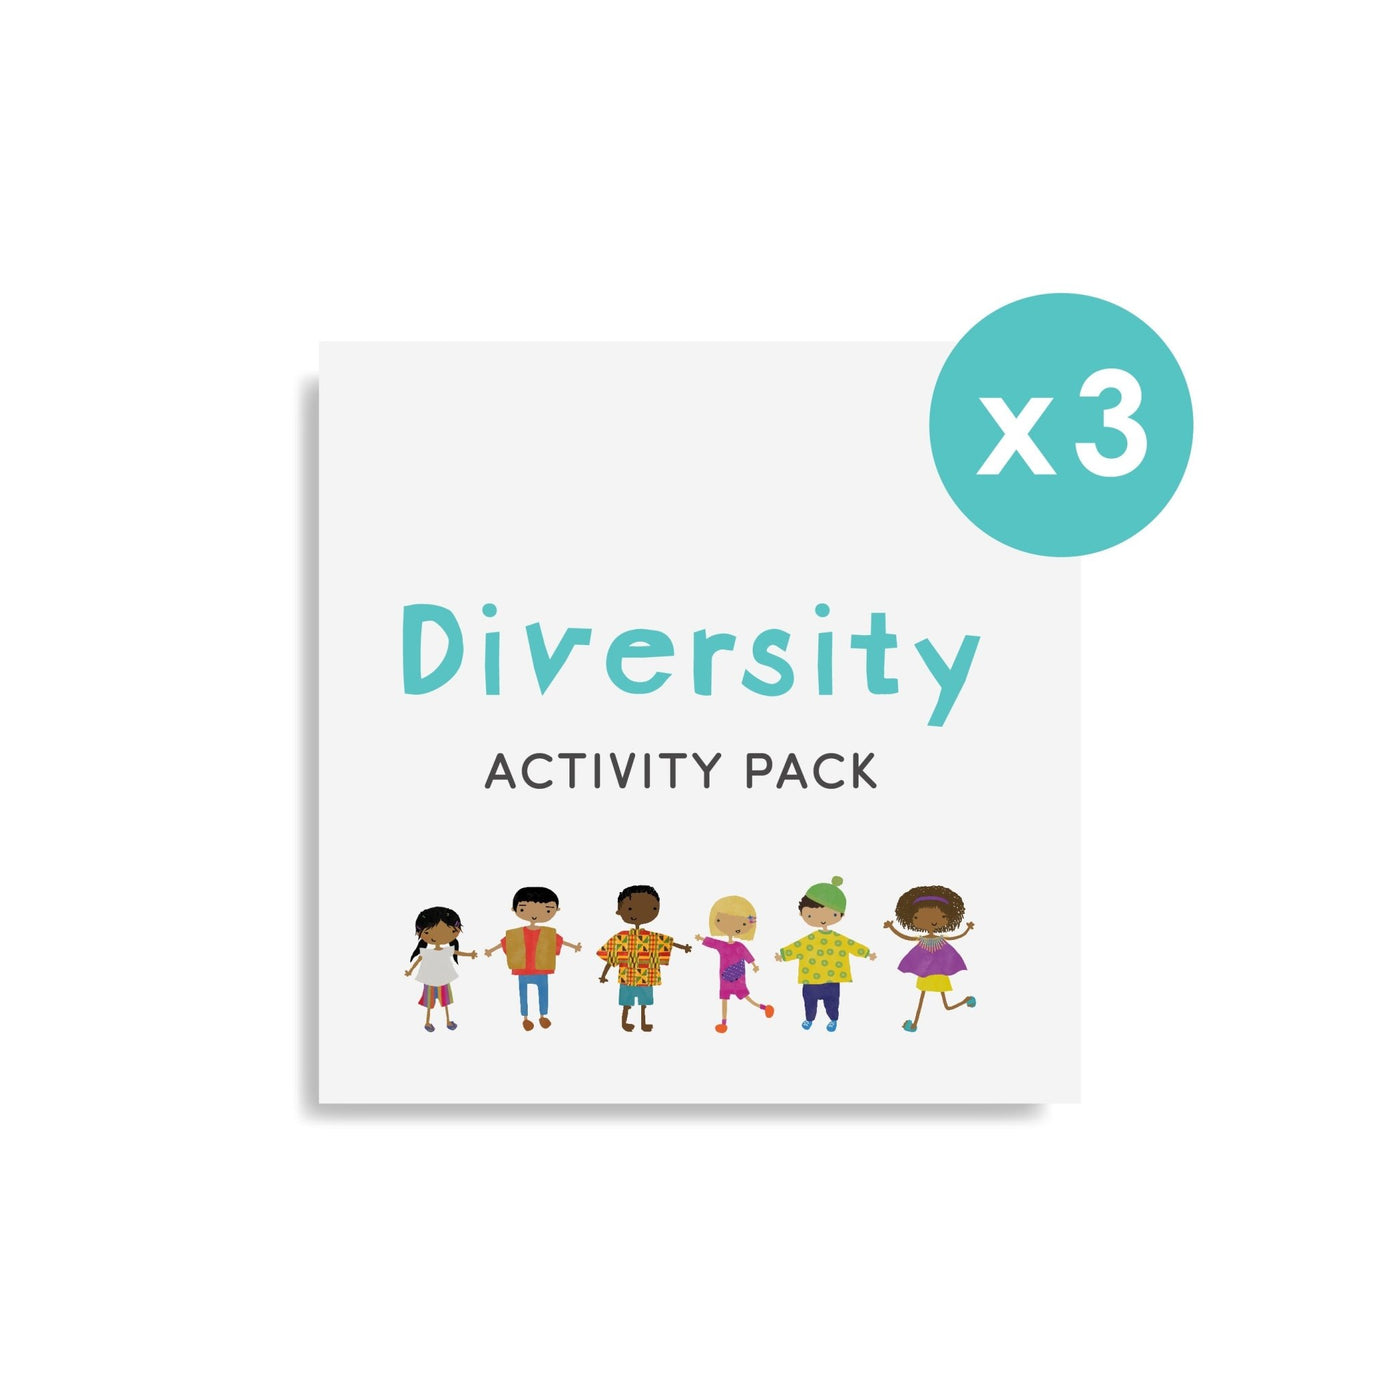 Diversity Activity Pack by Worldwide Buddies